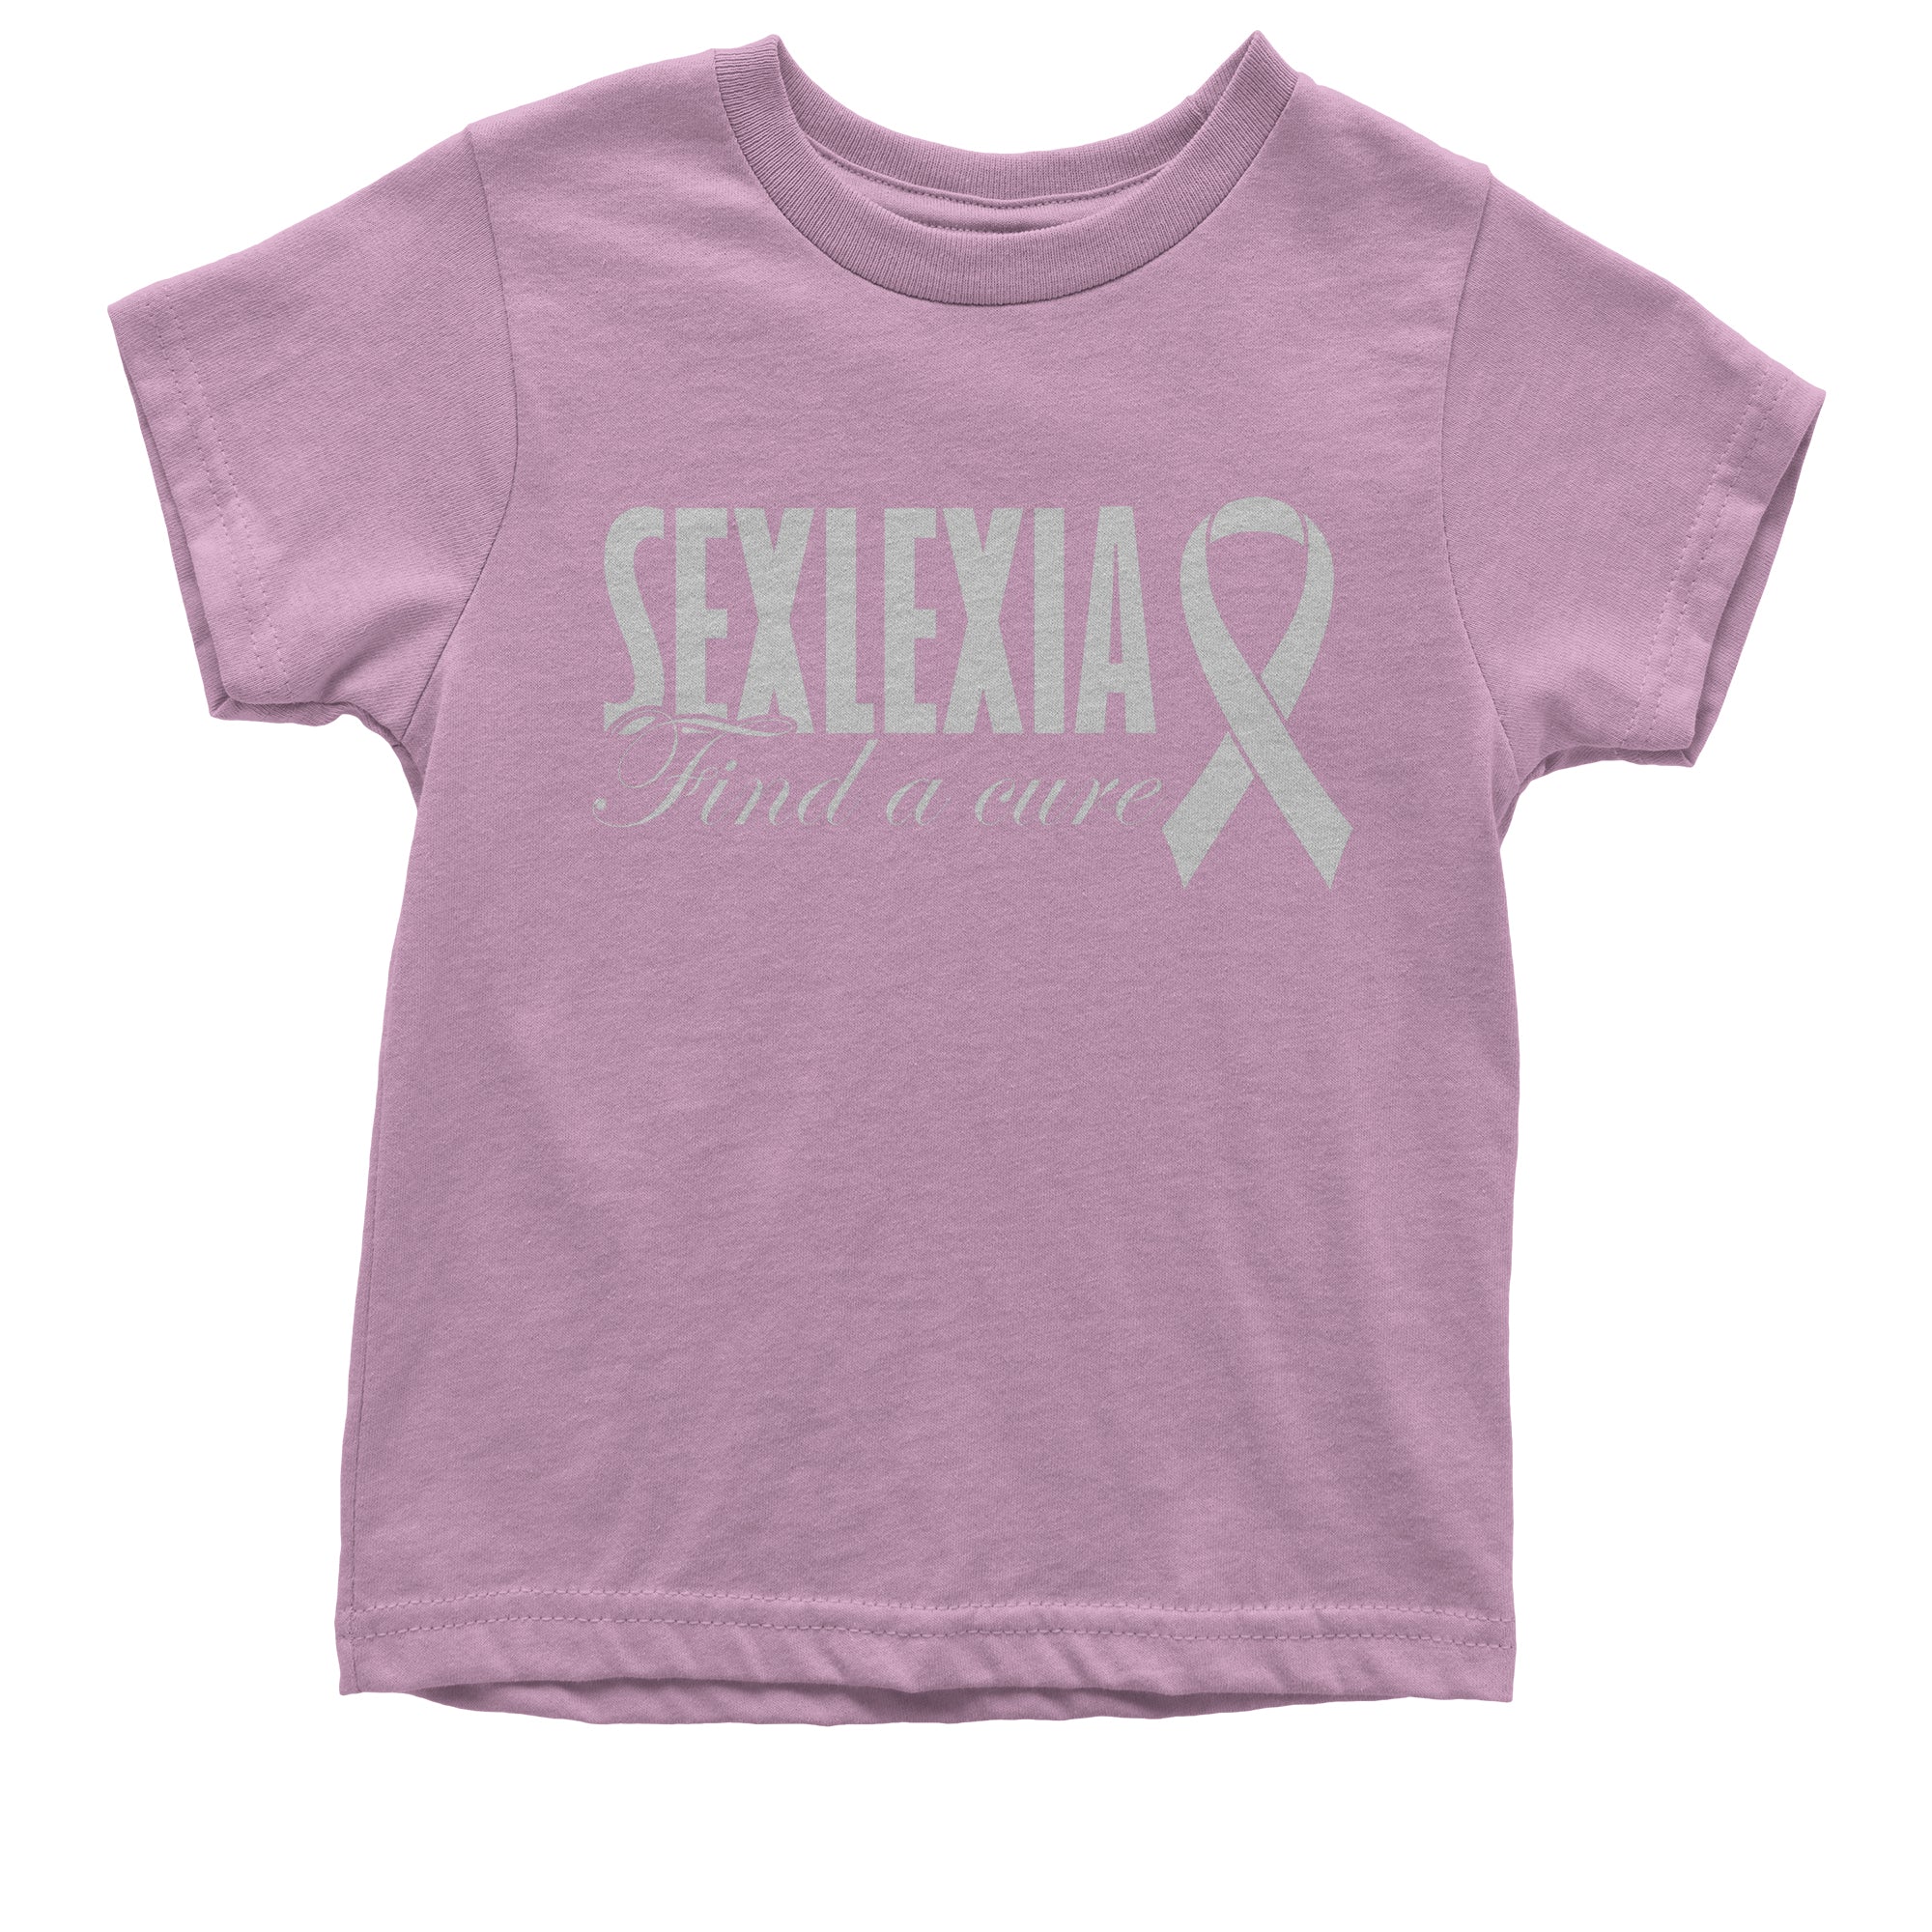 Sexlexia Find a Cure Kid's T-Shirt